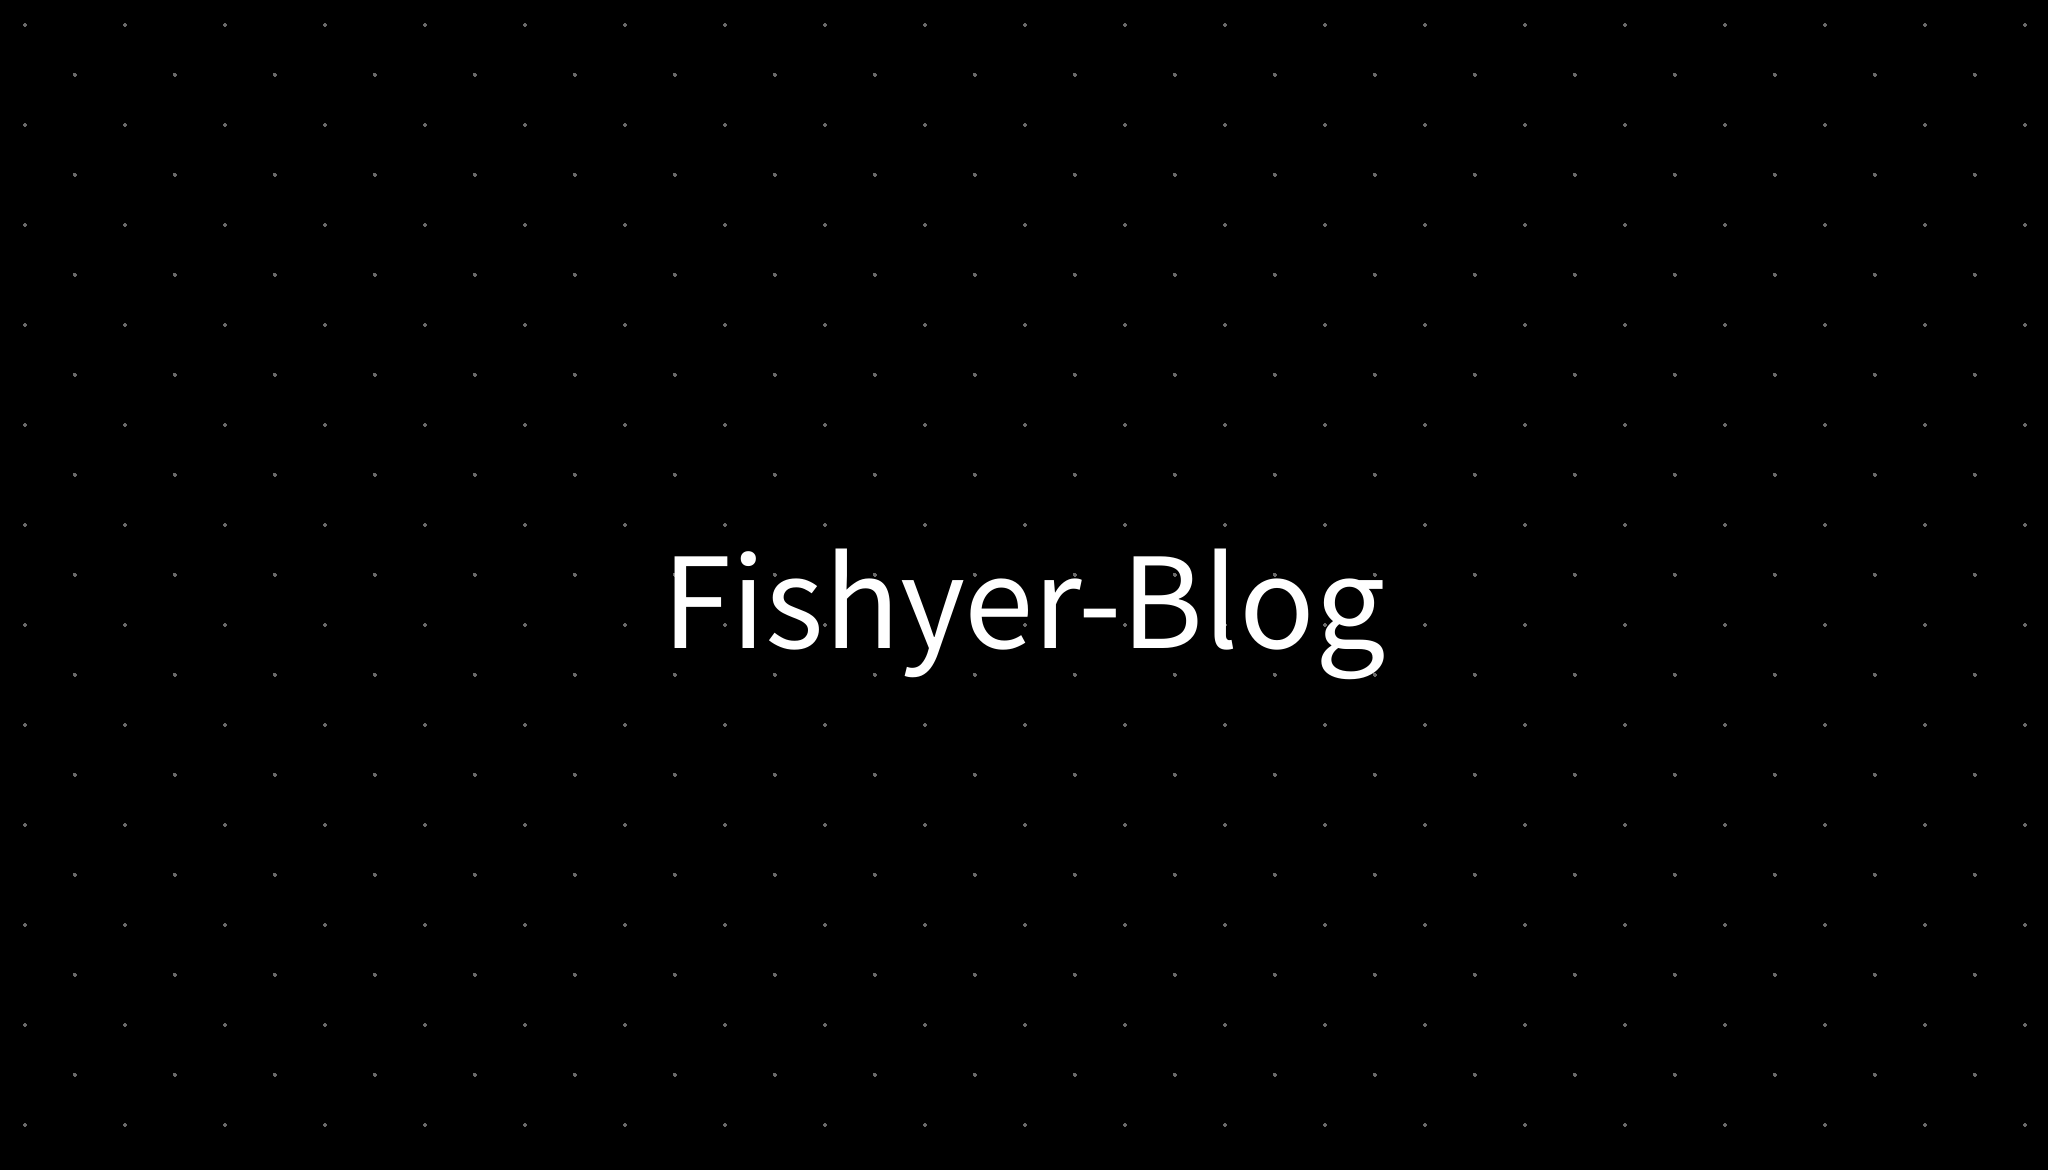 Fishyer-Blog